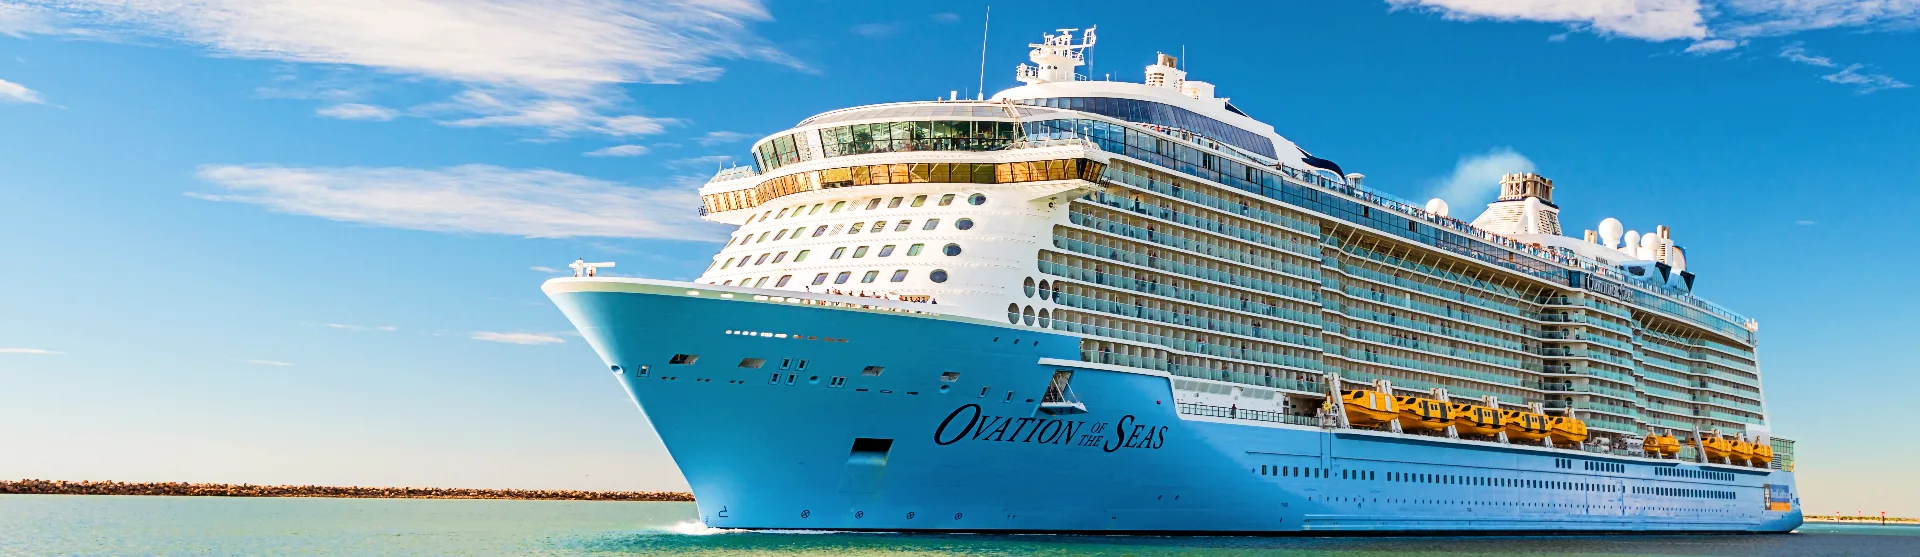 Ovation of the Seas - Royal Caribbean